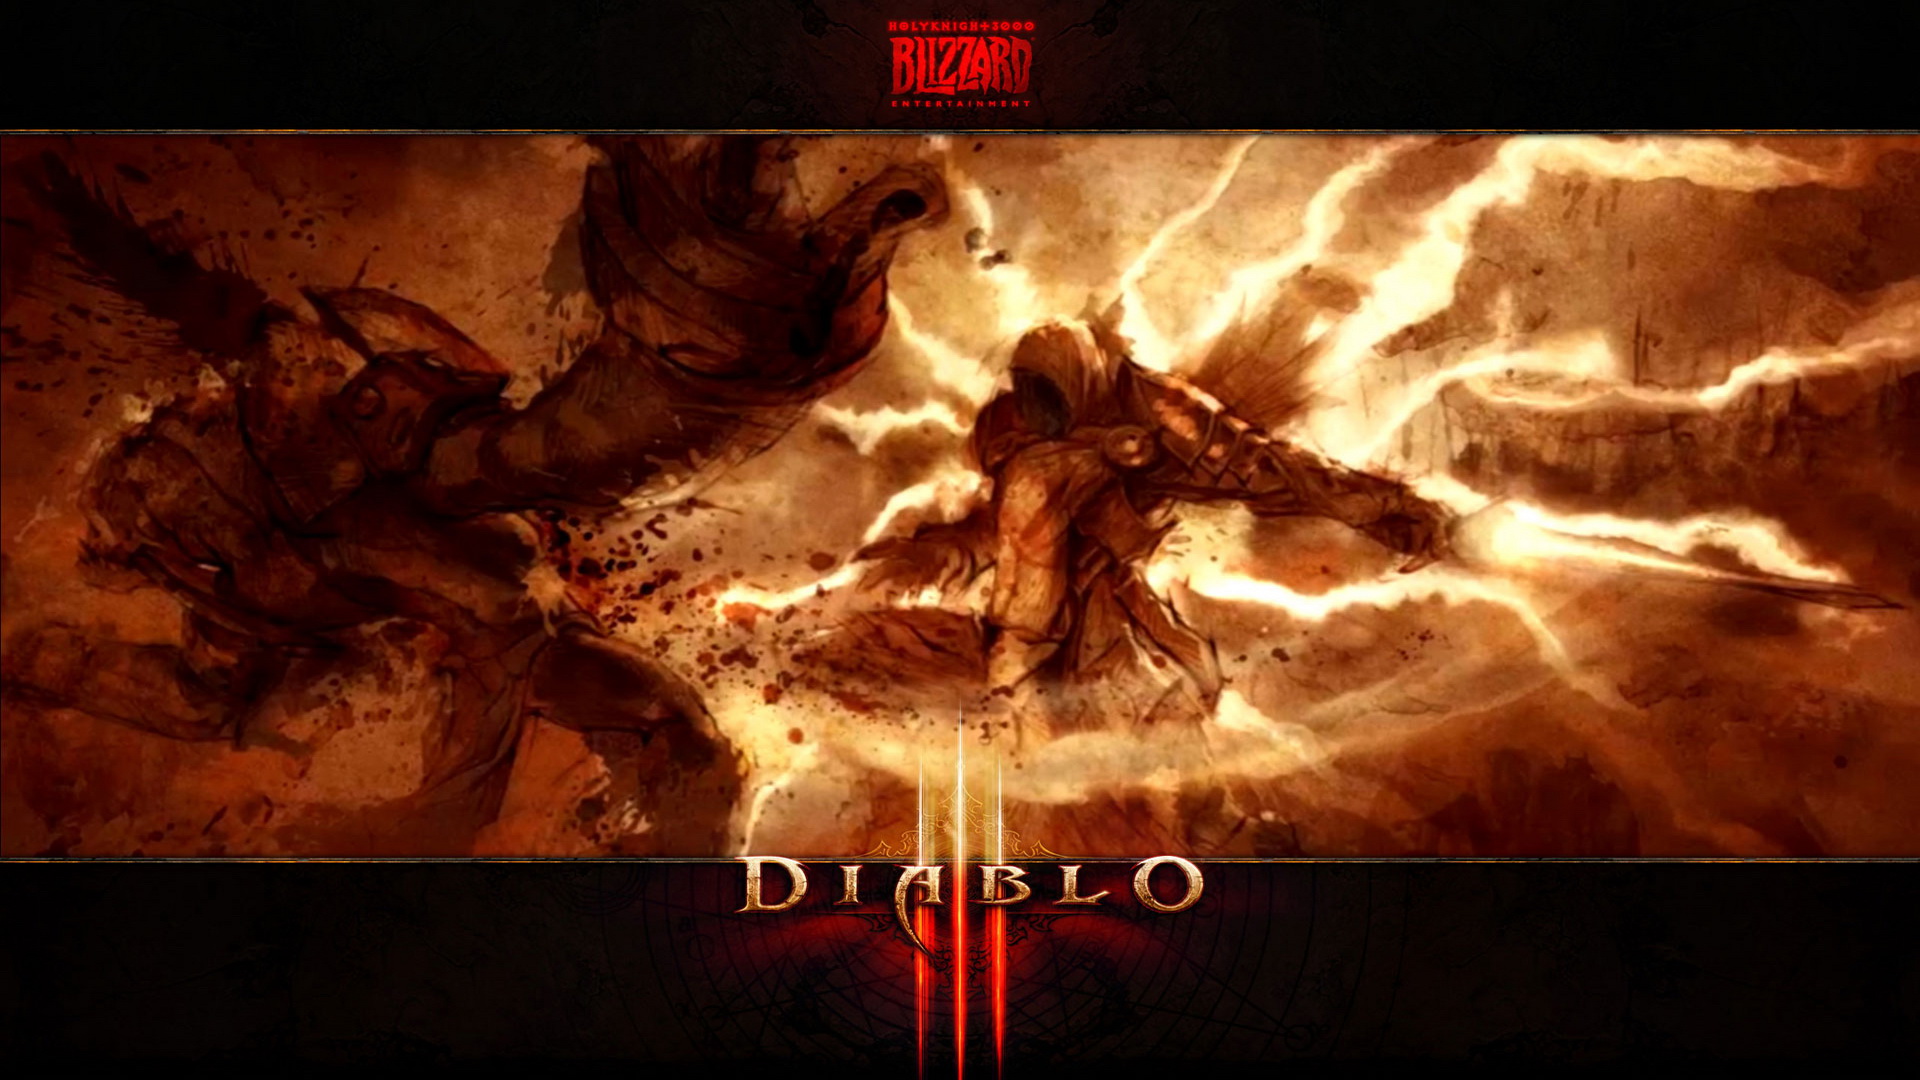 Diablo Tyrael Fighting Demons Wallpaper Game HD Video